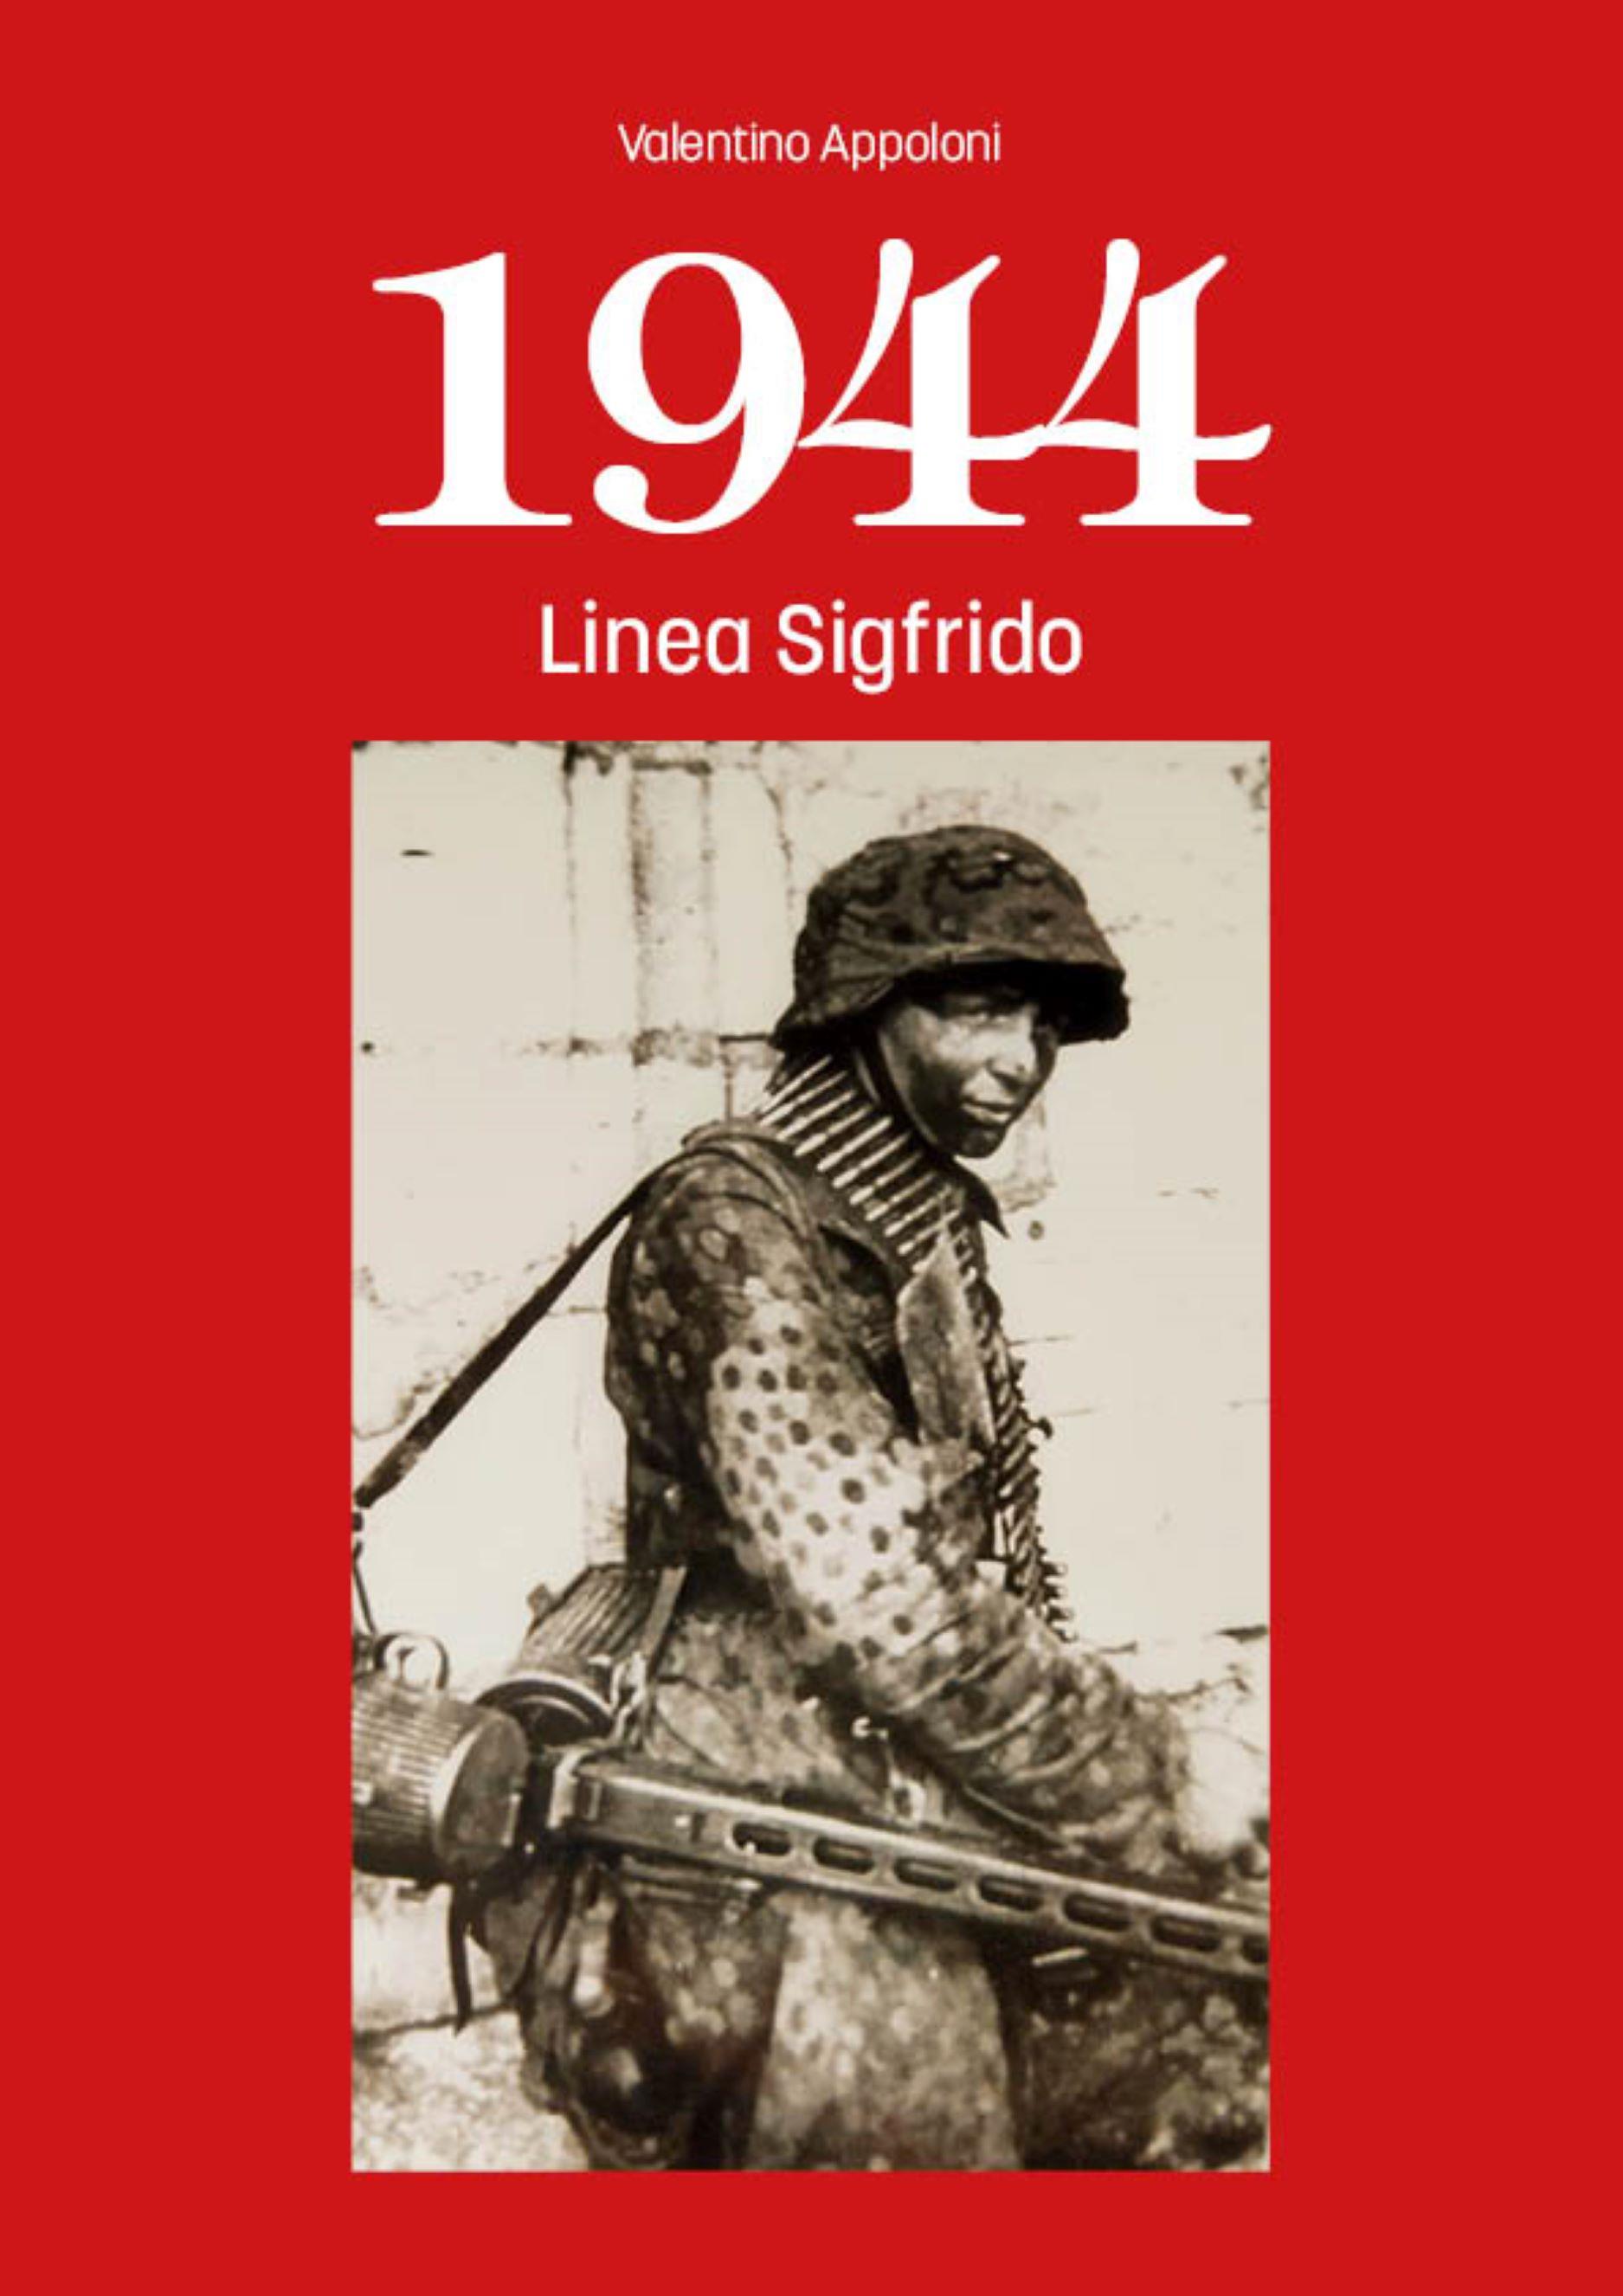 1944 Linea Sigfrido